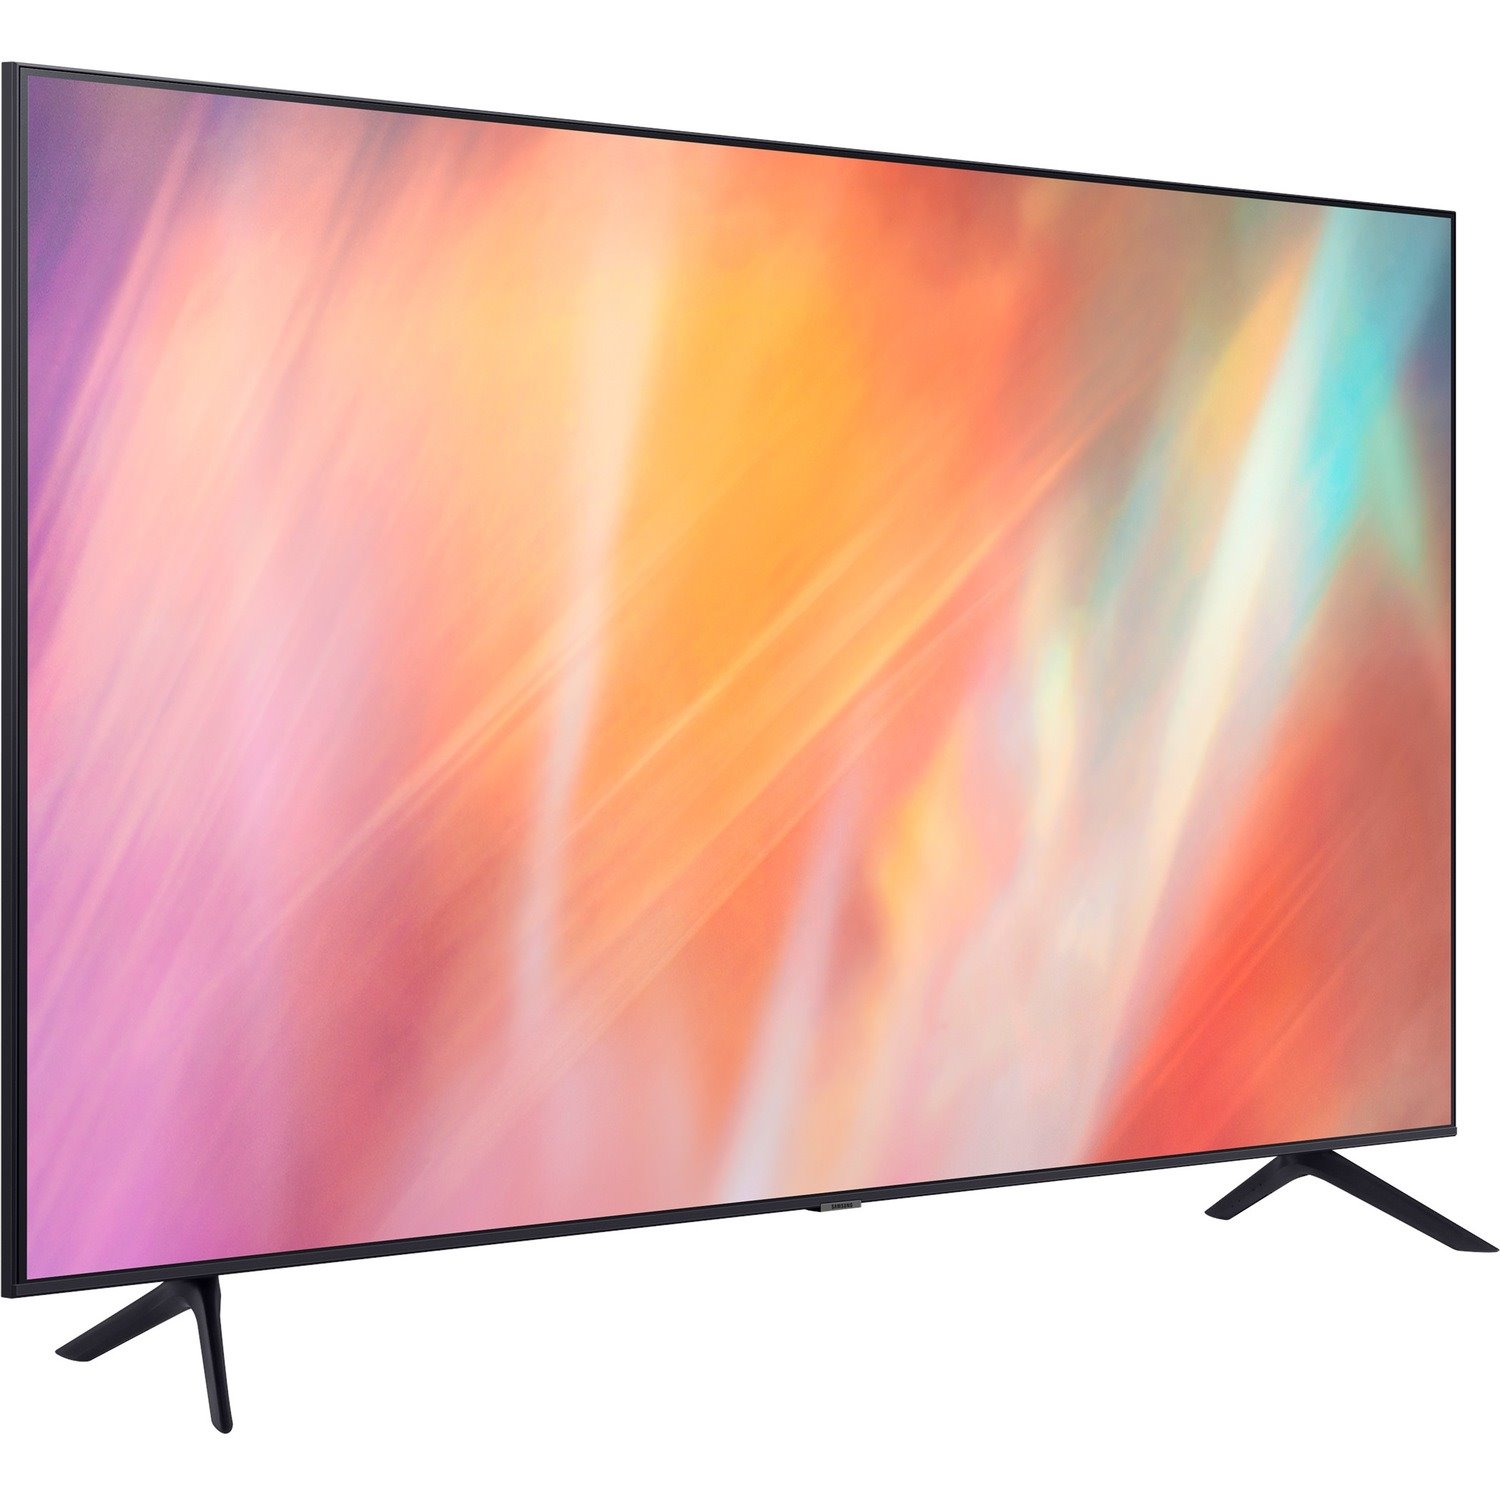 Samsung LH75BEAHLGW 190.5 cm Smart LED-LCD TV - 4K UHDTV - Titan Gray